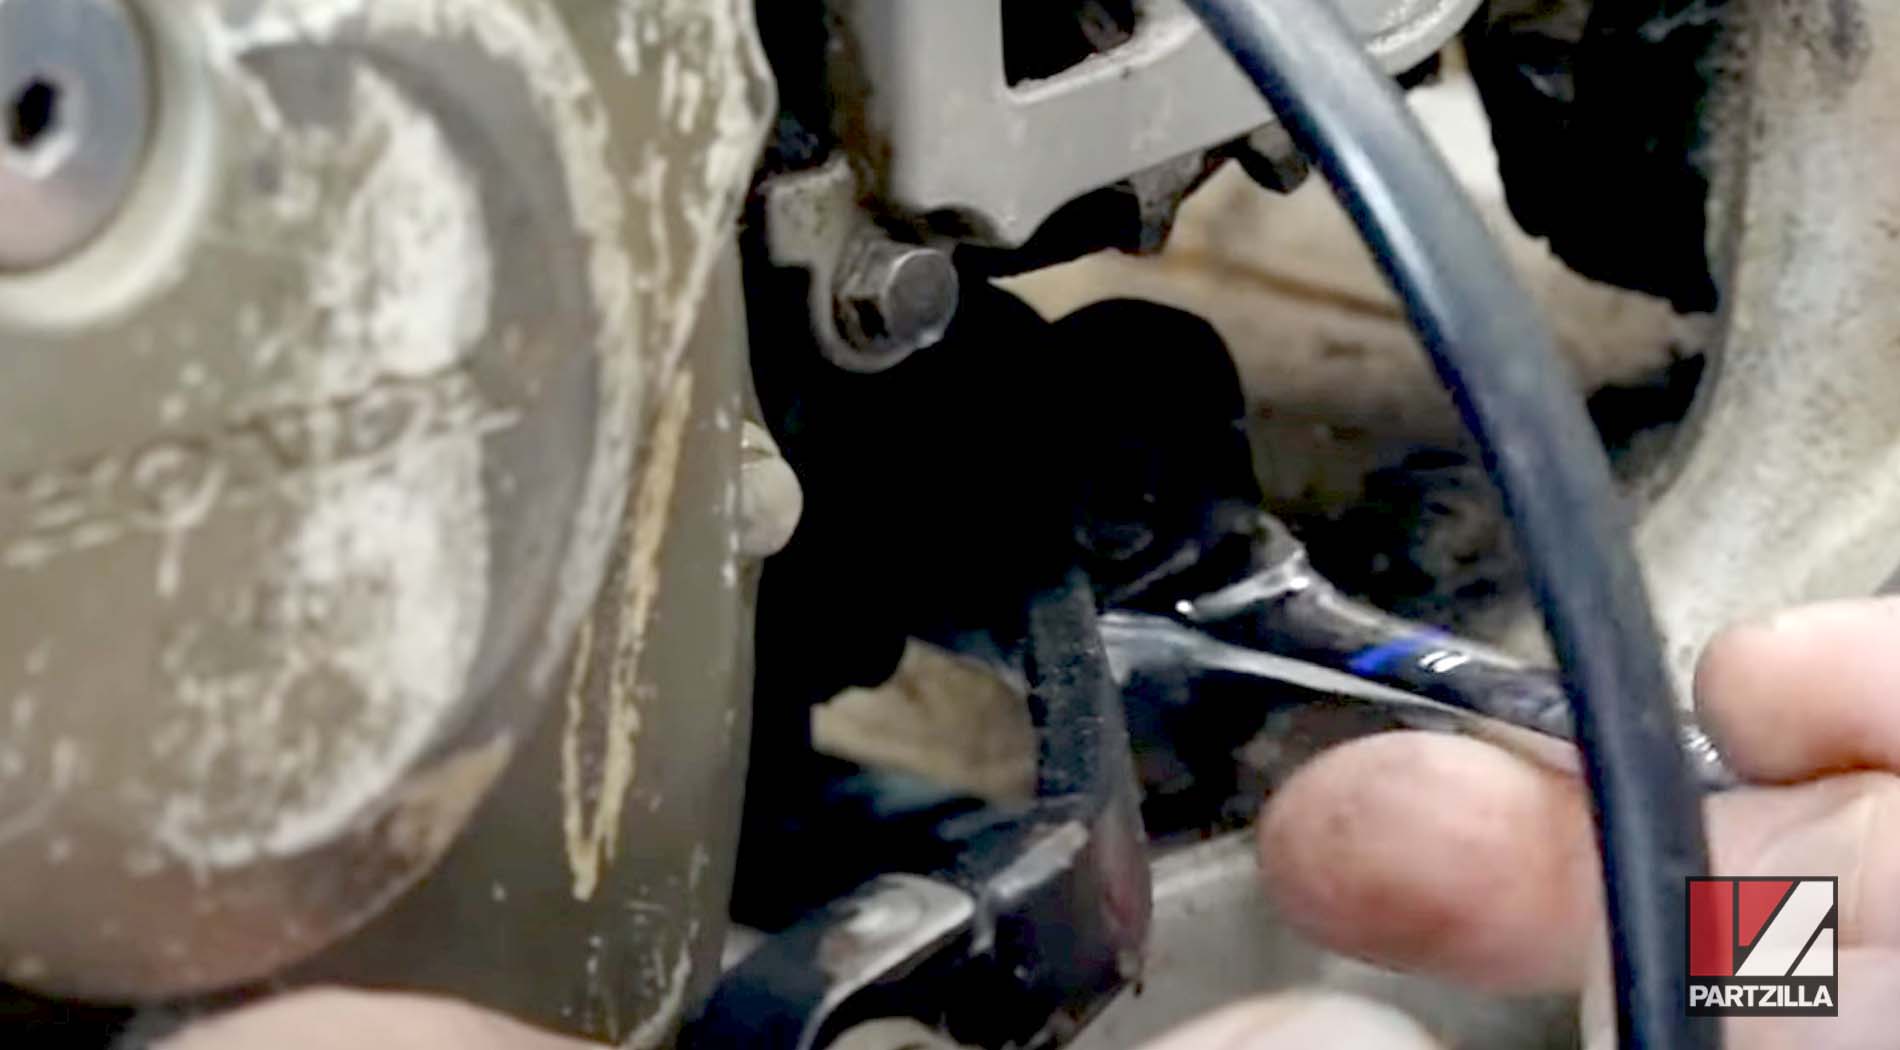 Honda CRF450 engine removal gear shift